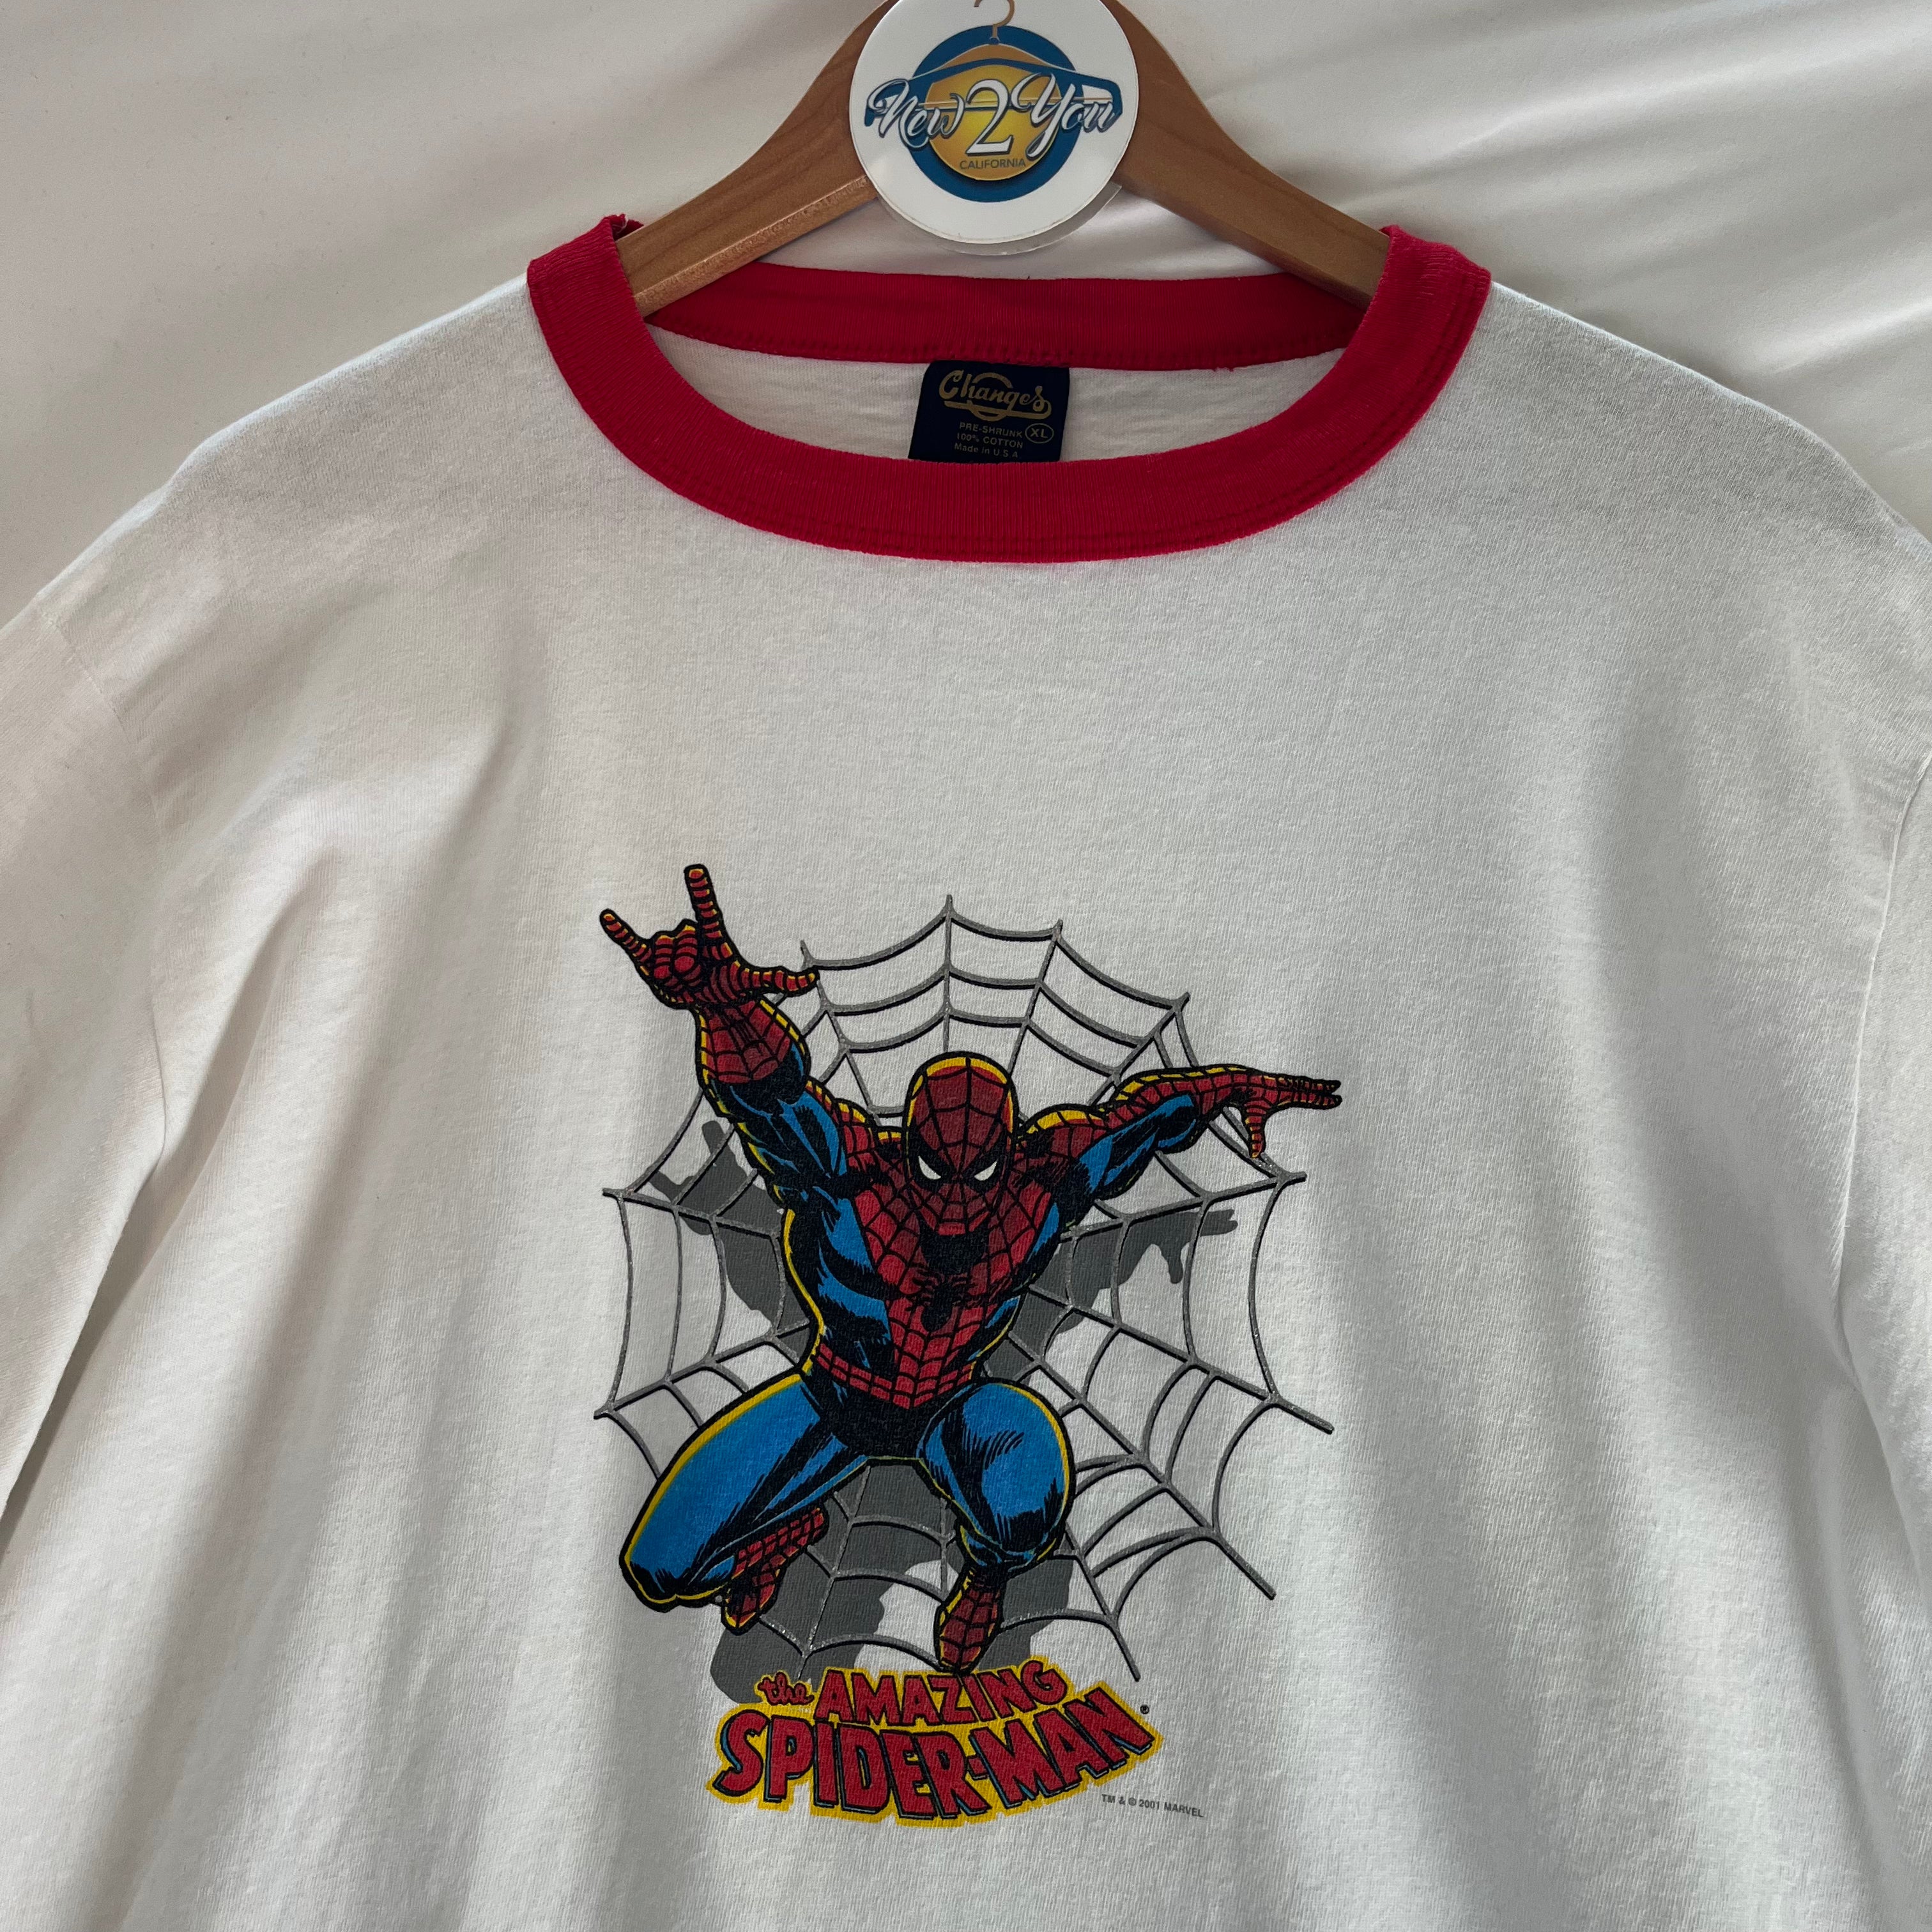 2001 VTG The Amazing Spider-Man Tee Single Stitch